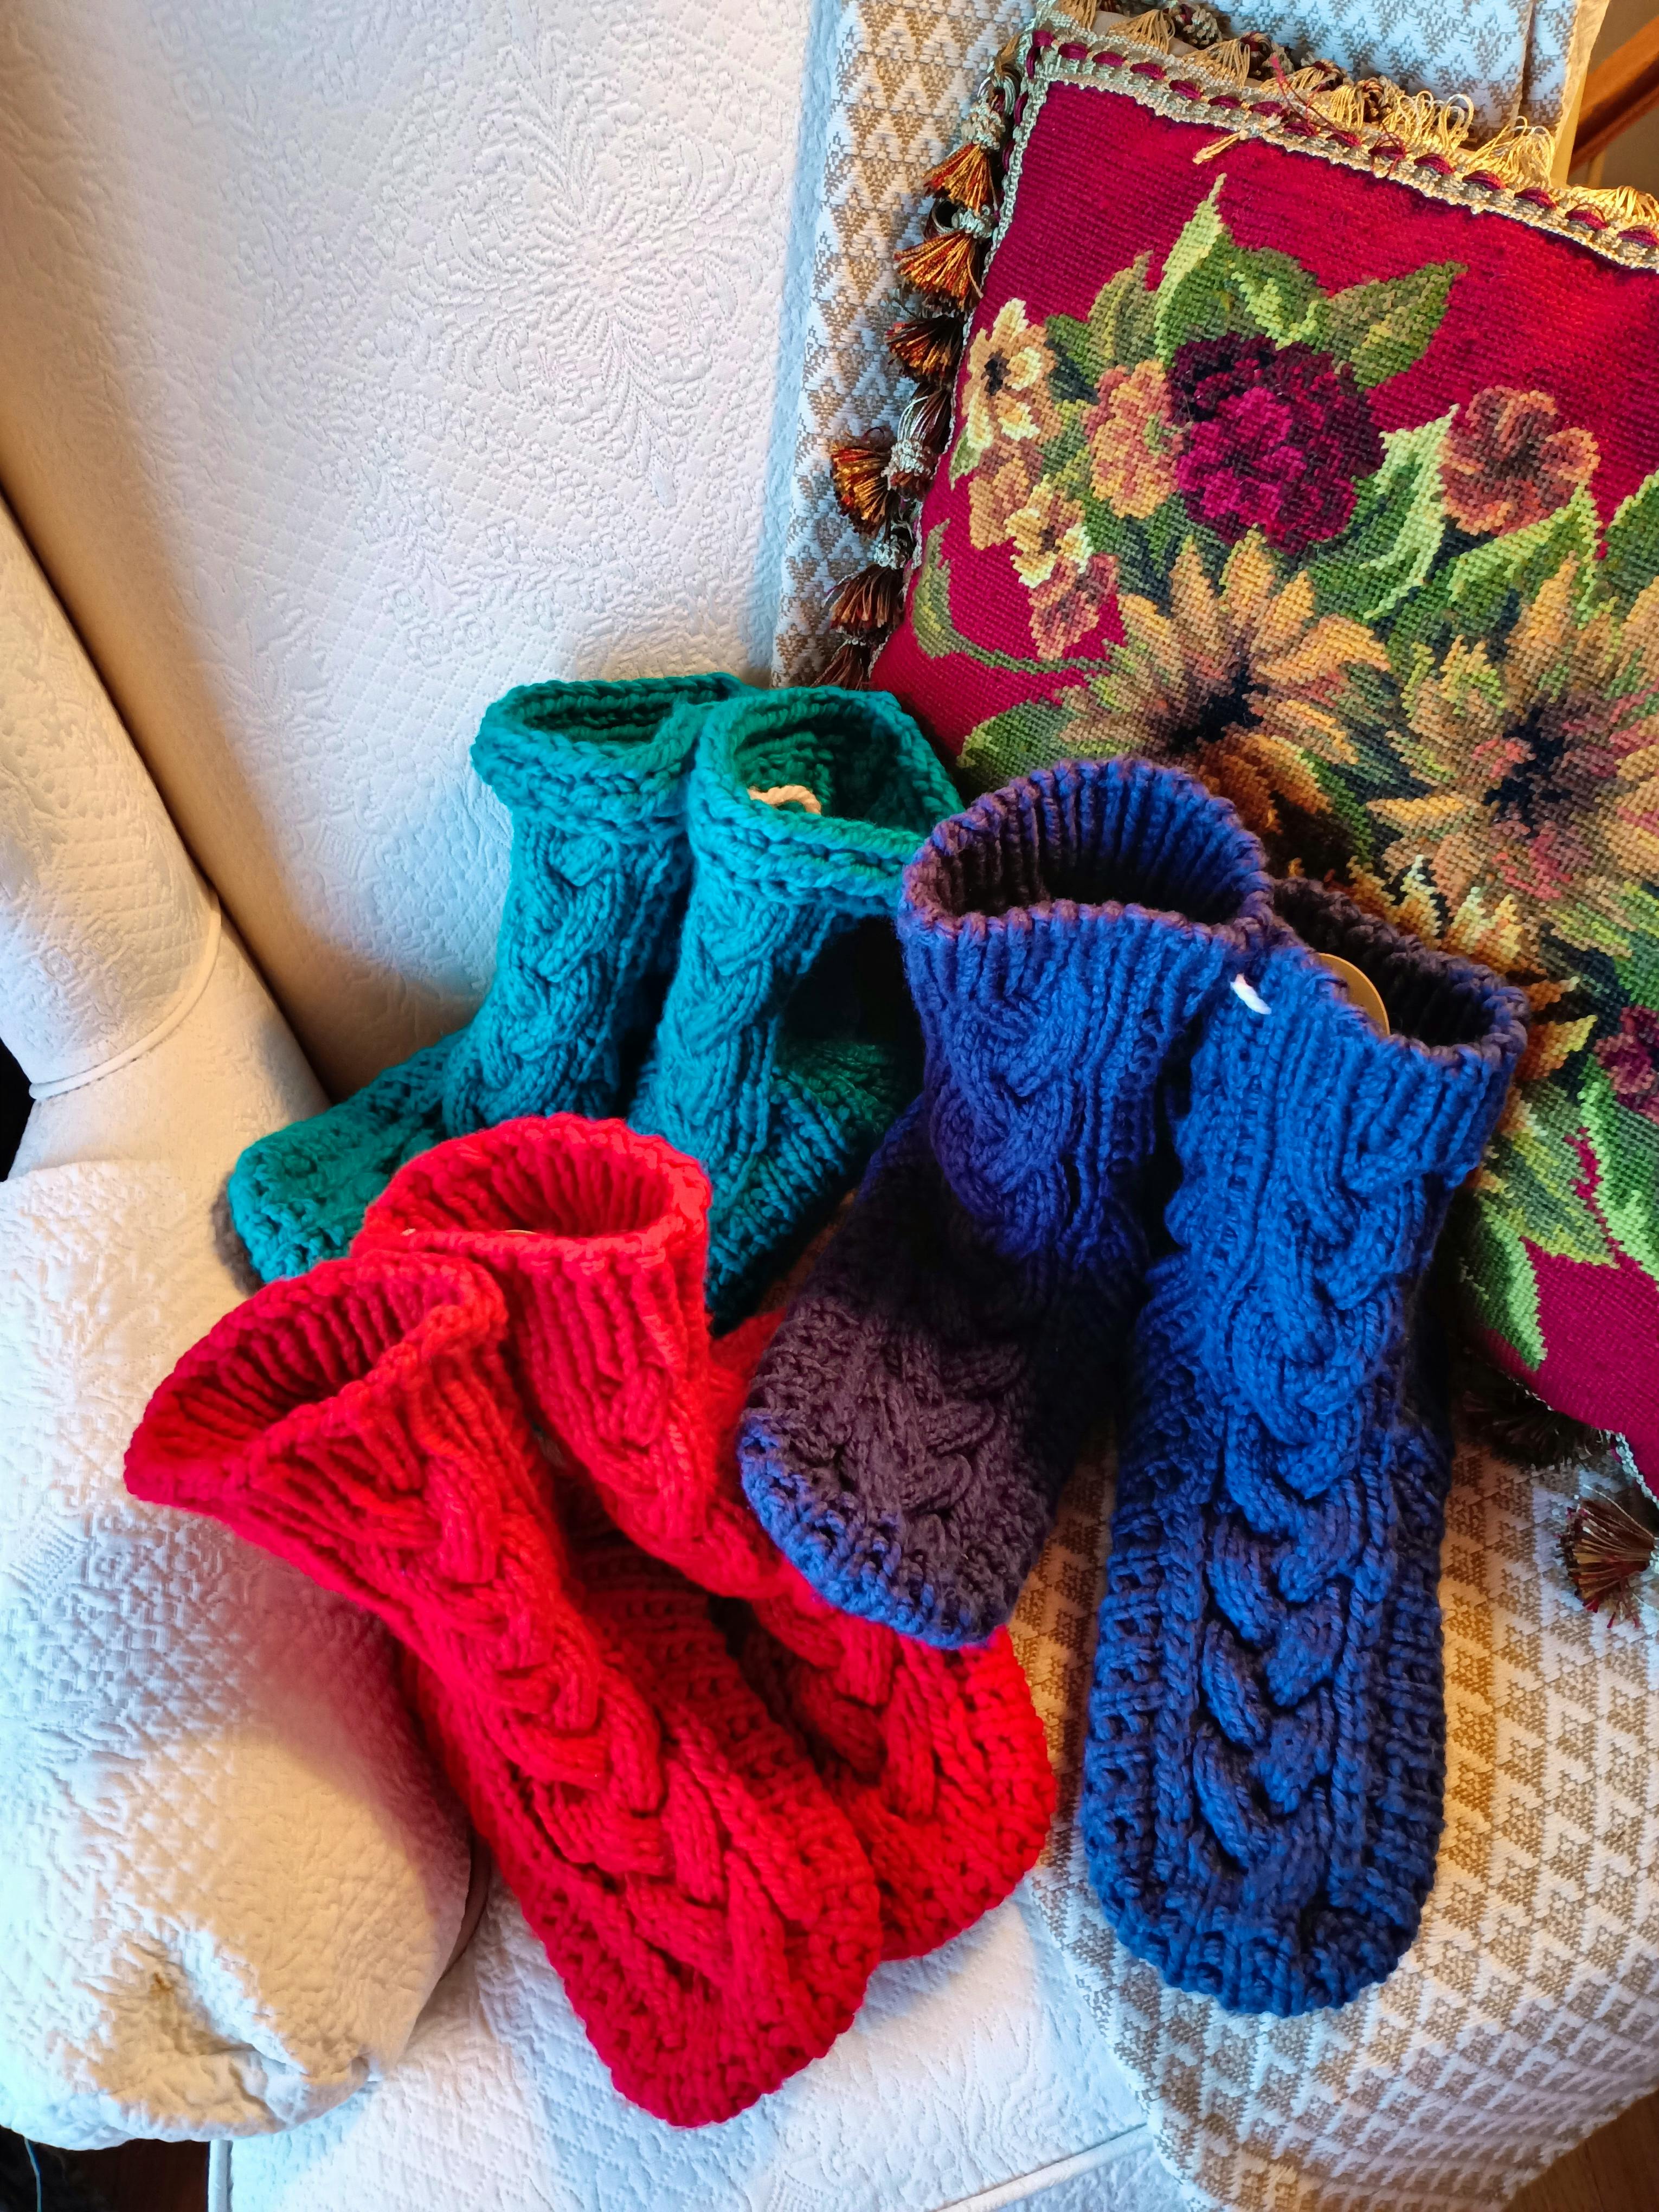 JANICE WELLS: Who knit ya? Hit up Socks in the City in St. John's